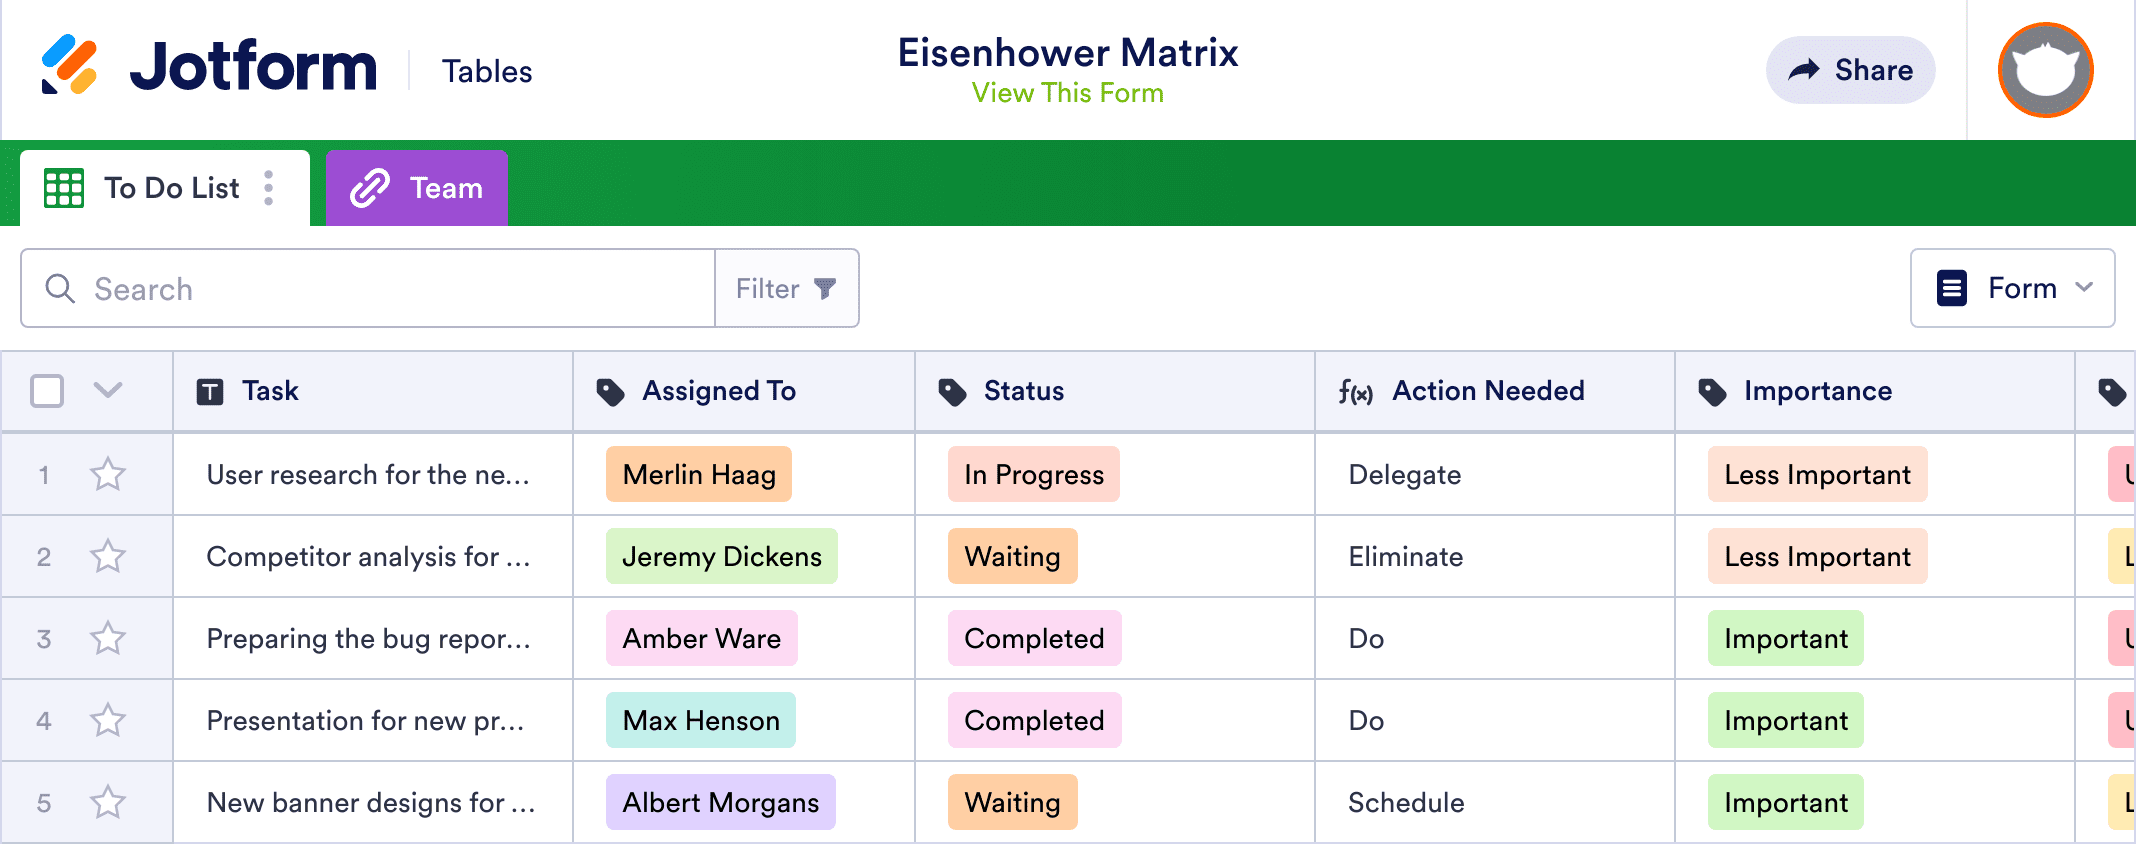 Eisenhower Matrix Template